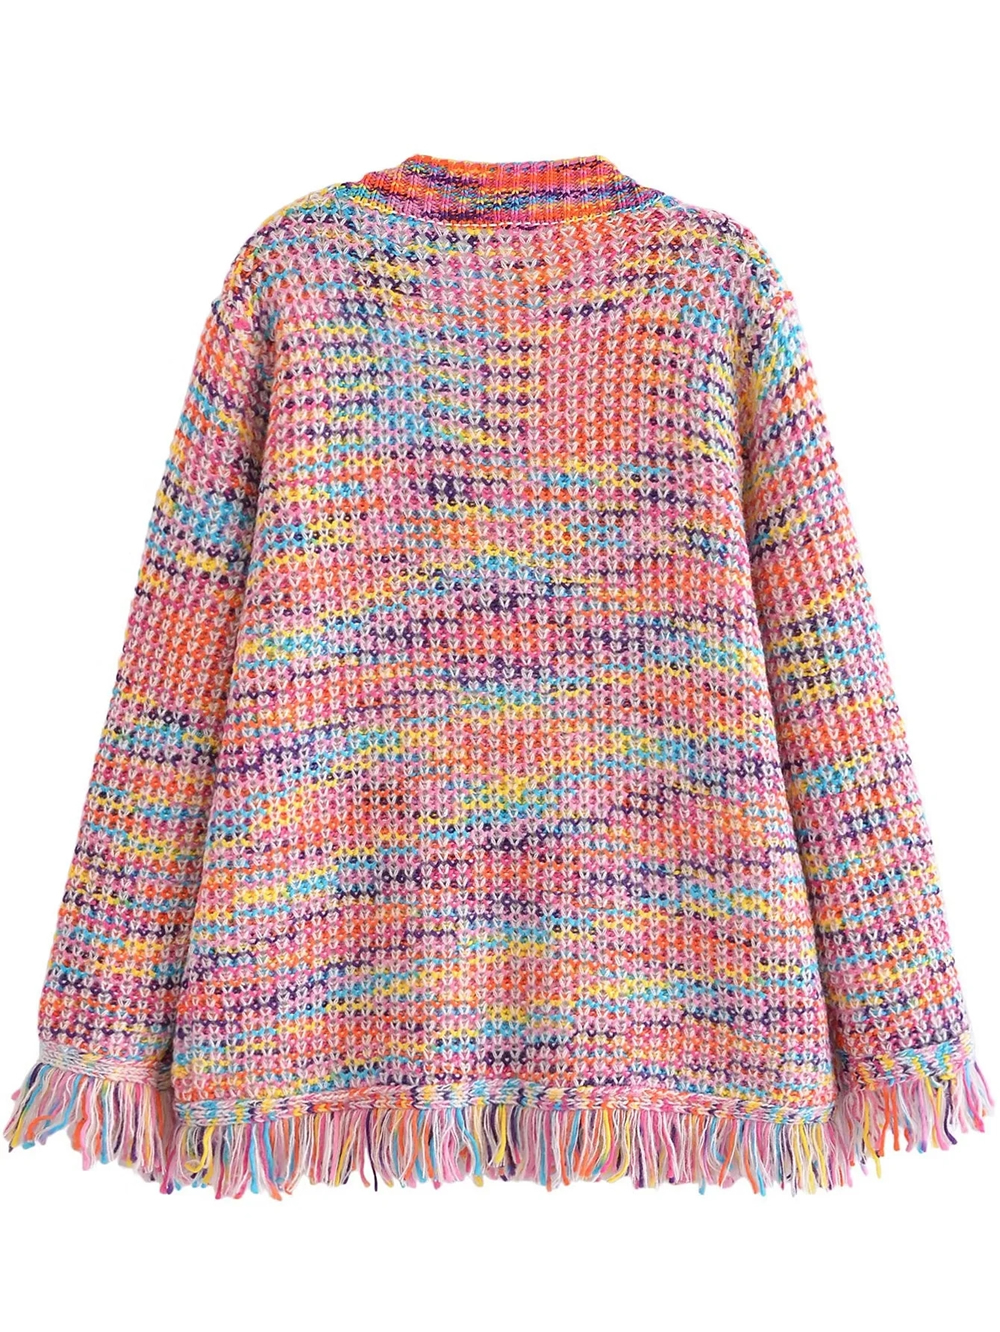 Fashion Color Rainbow Multicolor Fringe Cardigan,Sweater